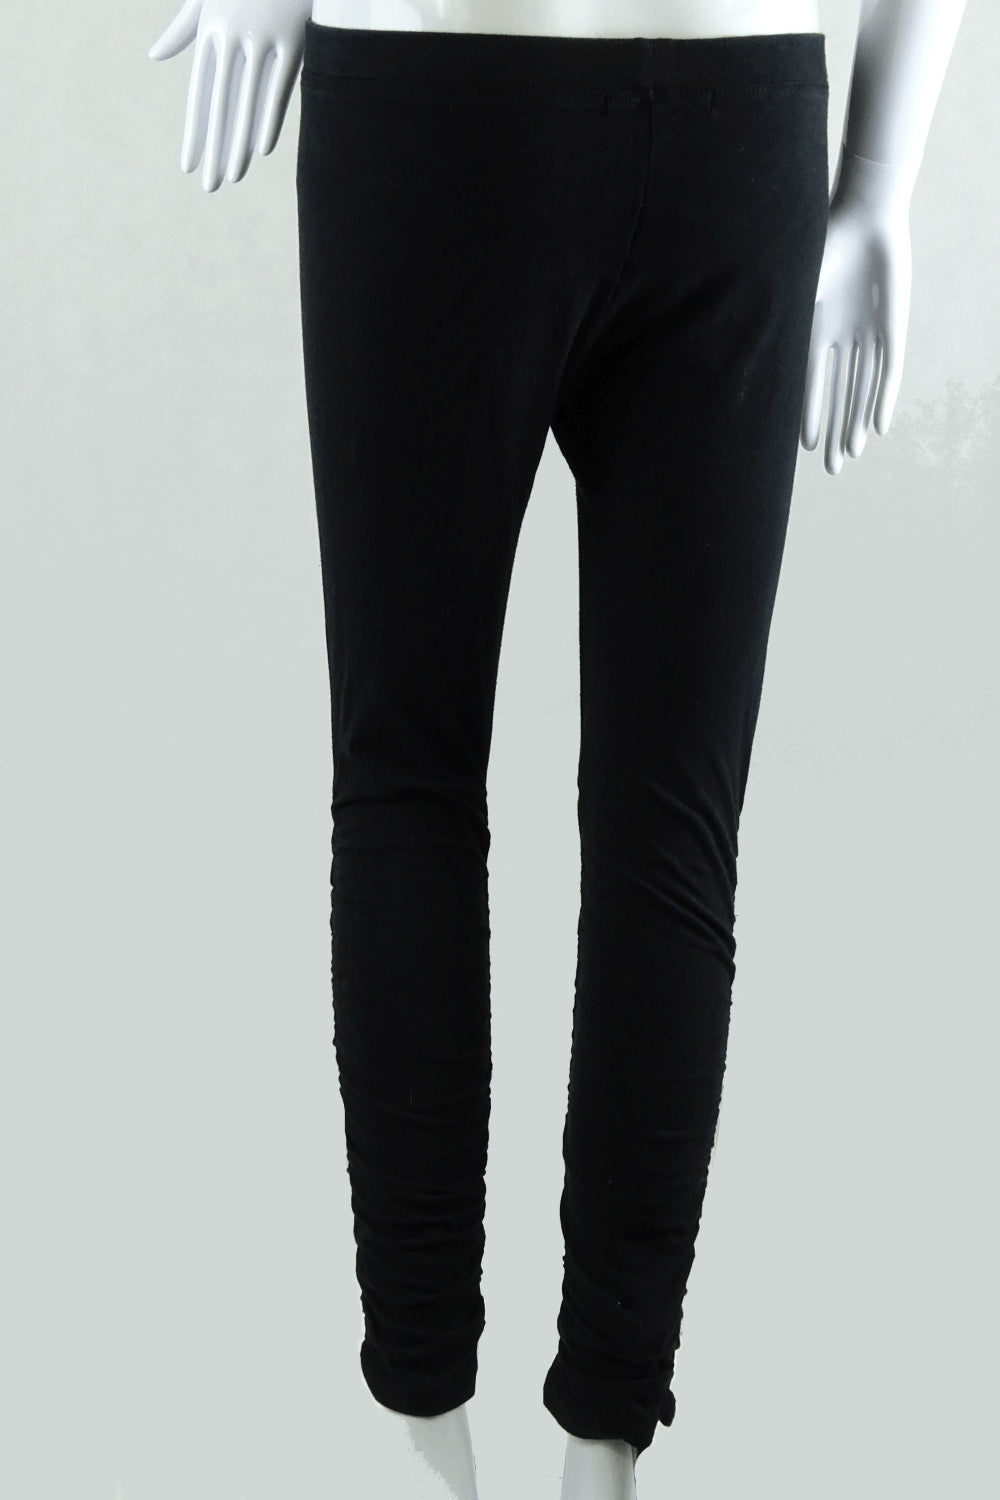 Taking Shape TS Black Leggings XS - Reluv Clothing Australia